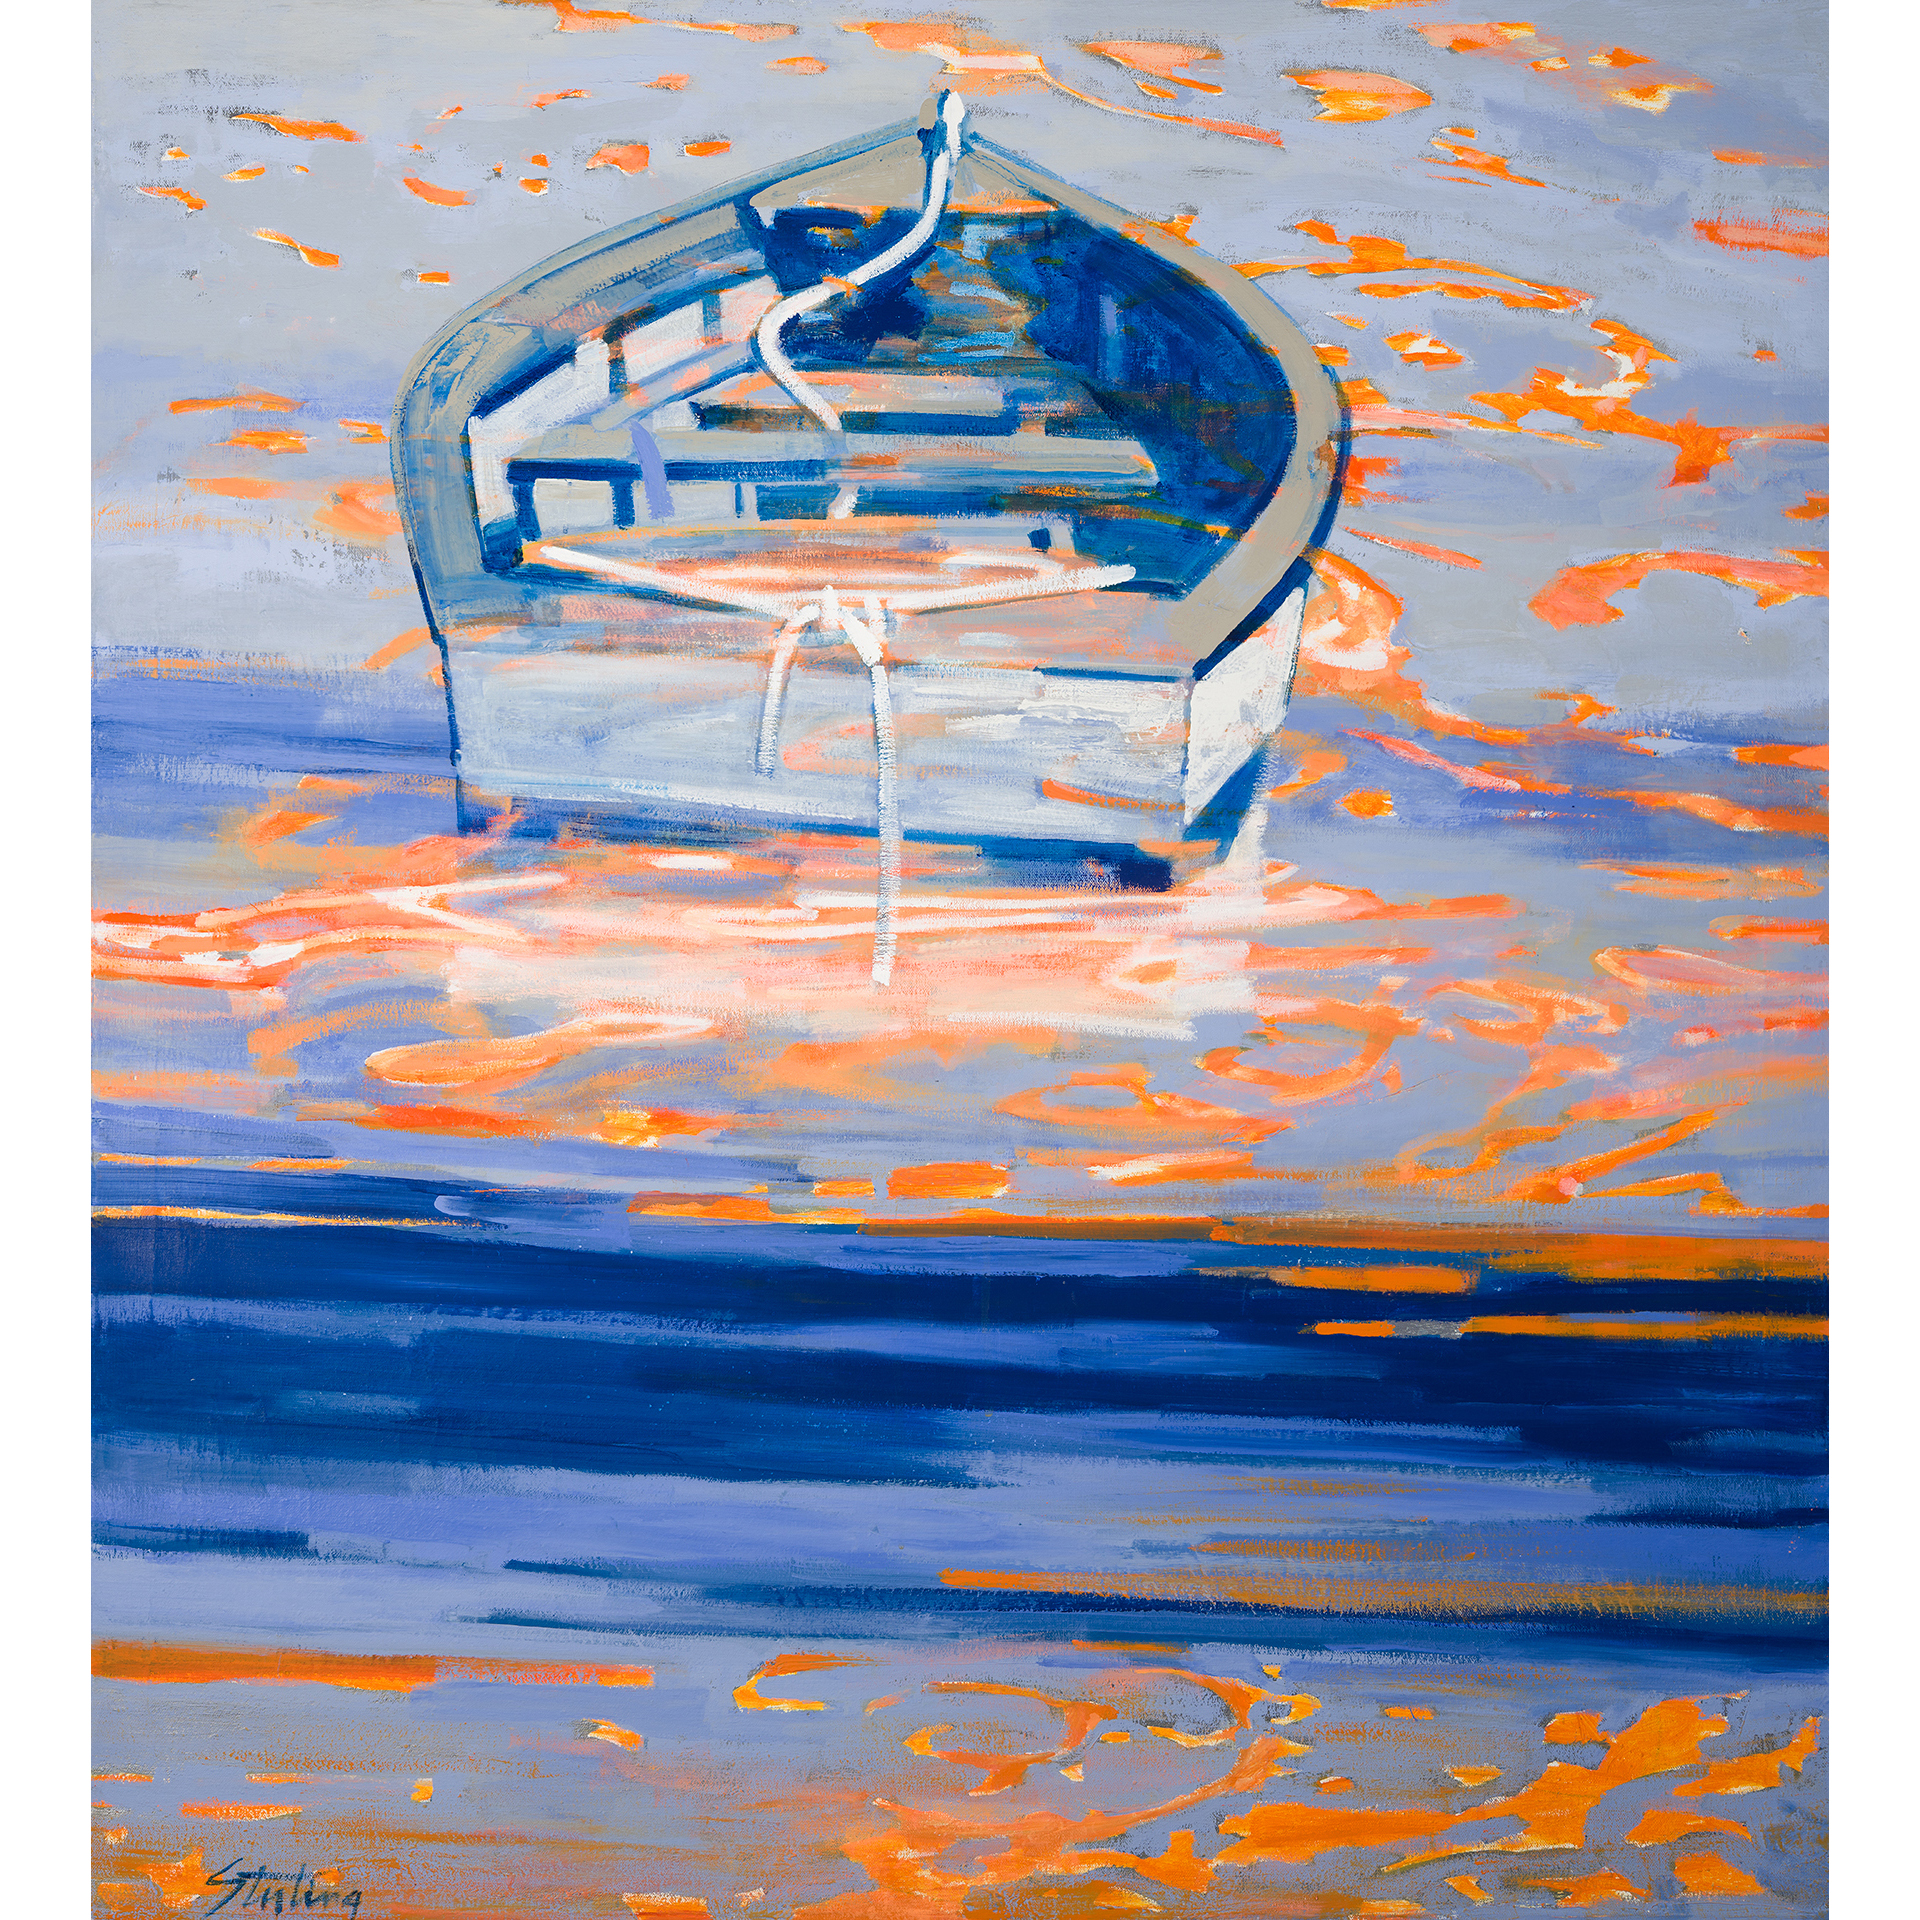 SMOKE ON THE WATER
44x40
acrylic on canvas